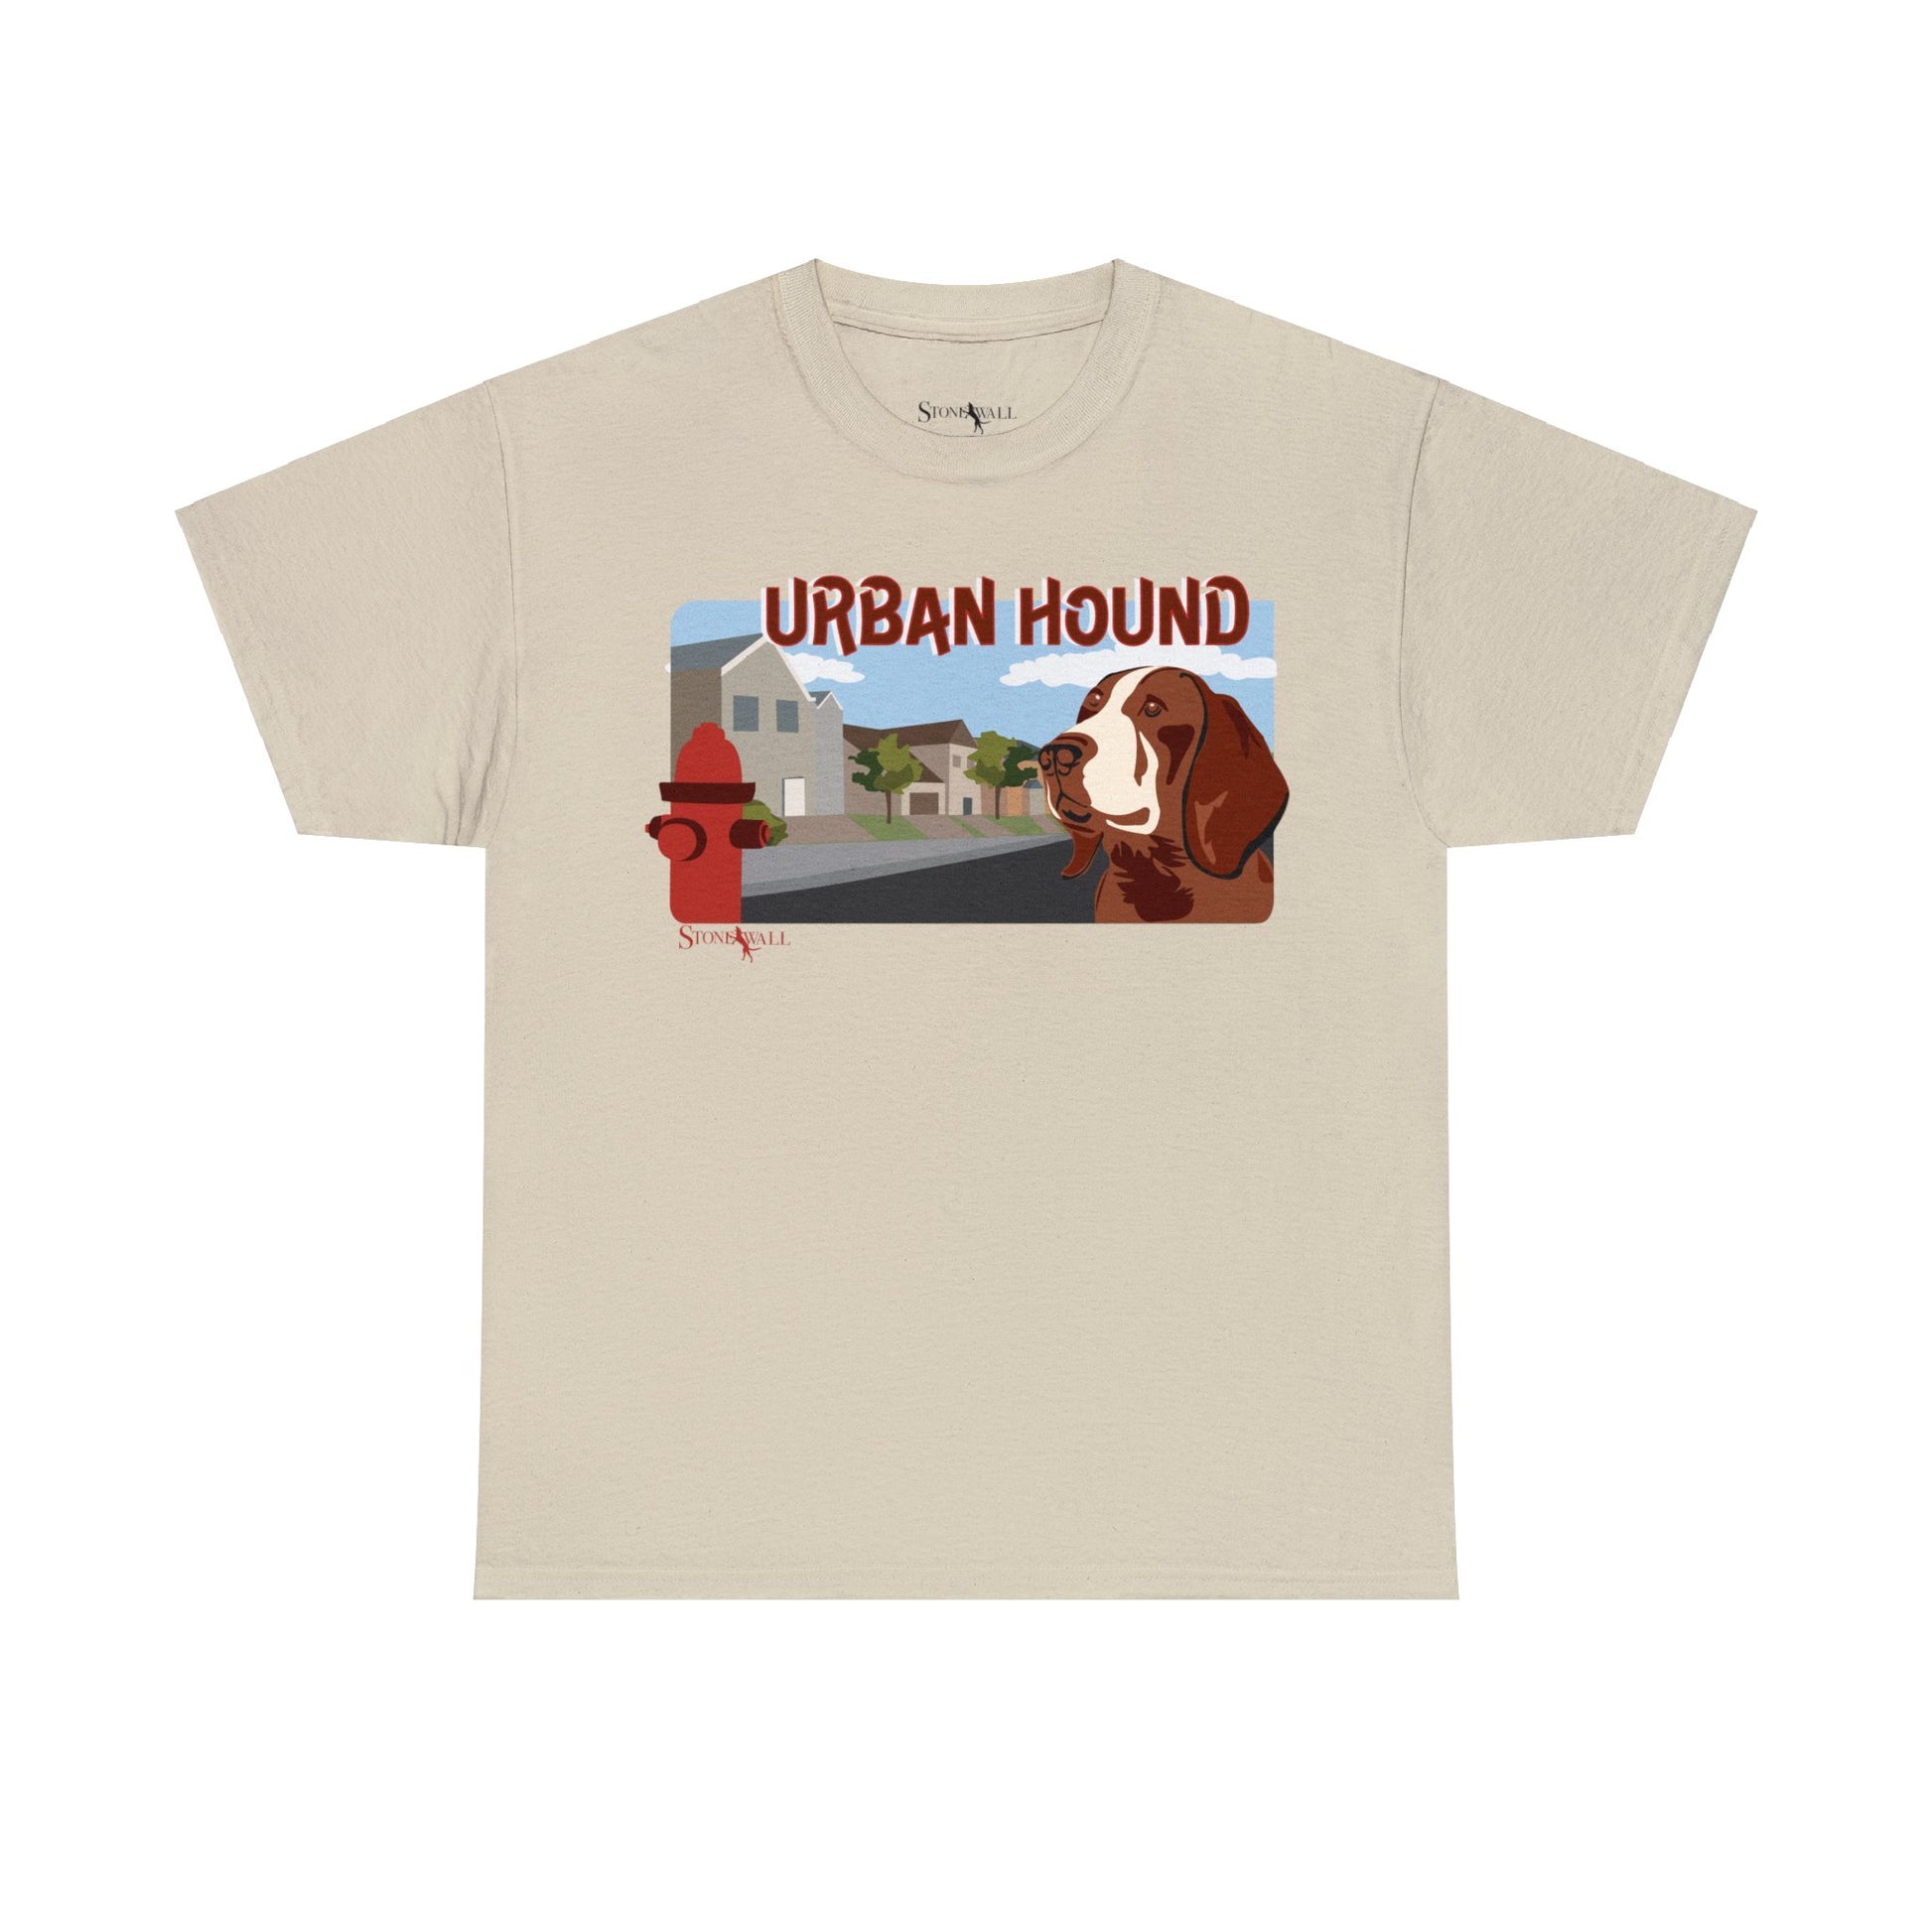 Urban Hound- Tan tee